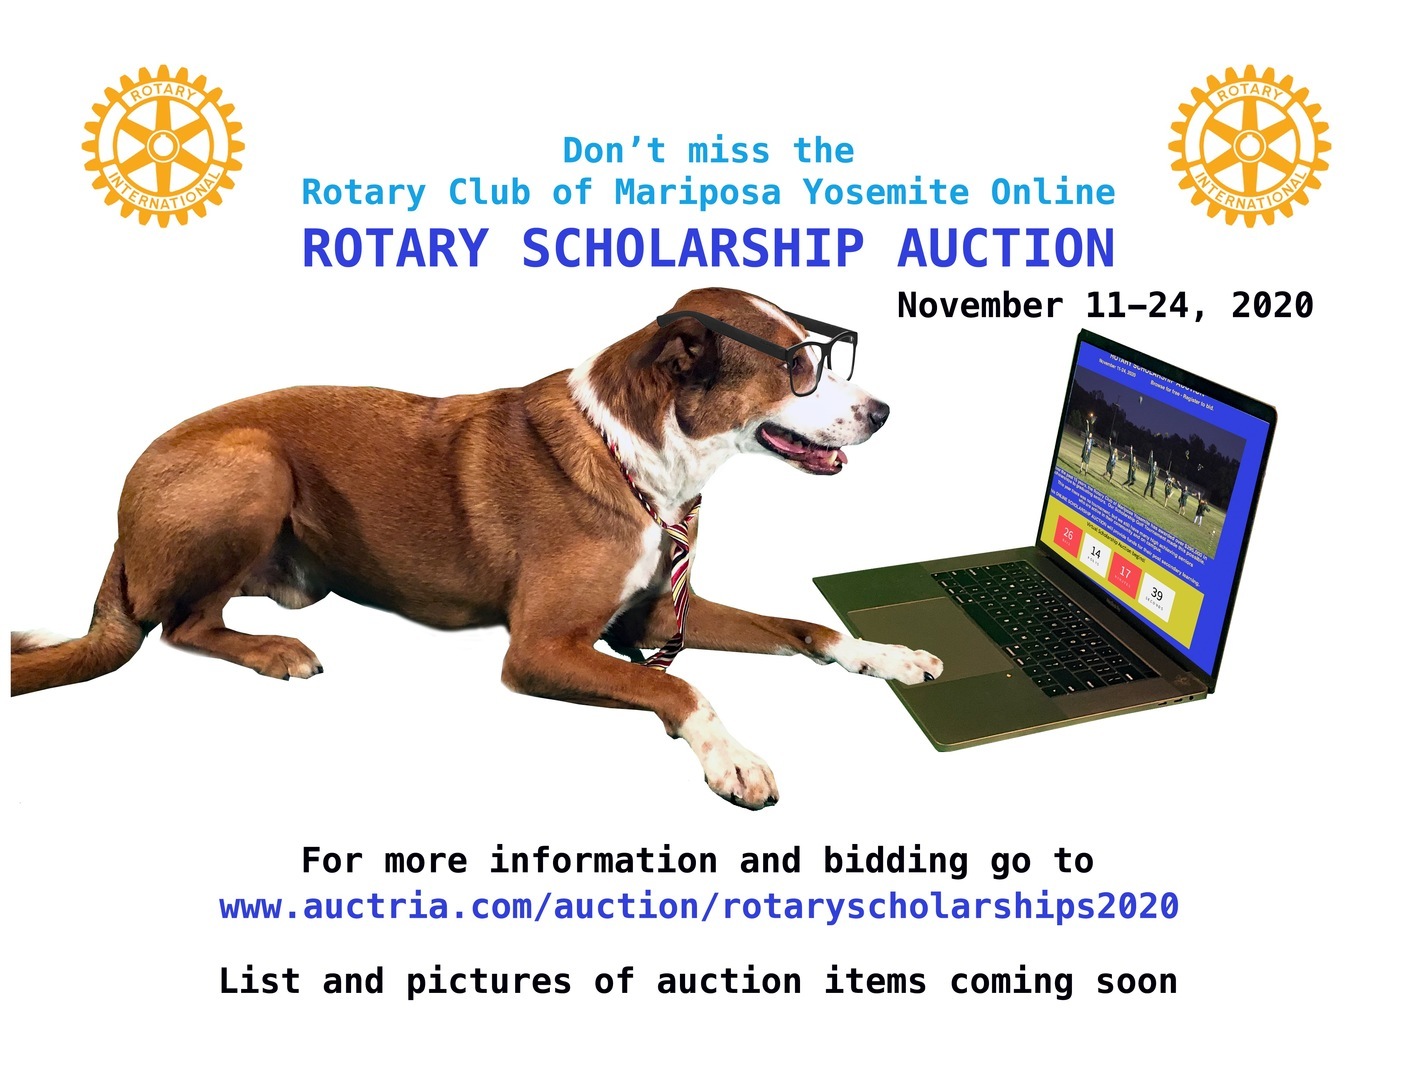 Rotary Club of Mariposa Yosemite Scholarship Auction, Mariposa, California, United States